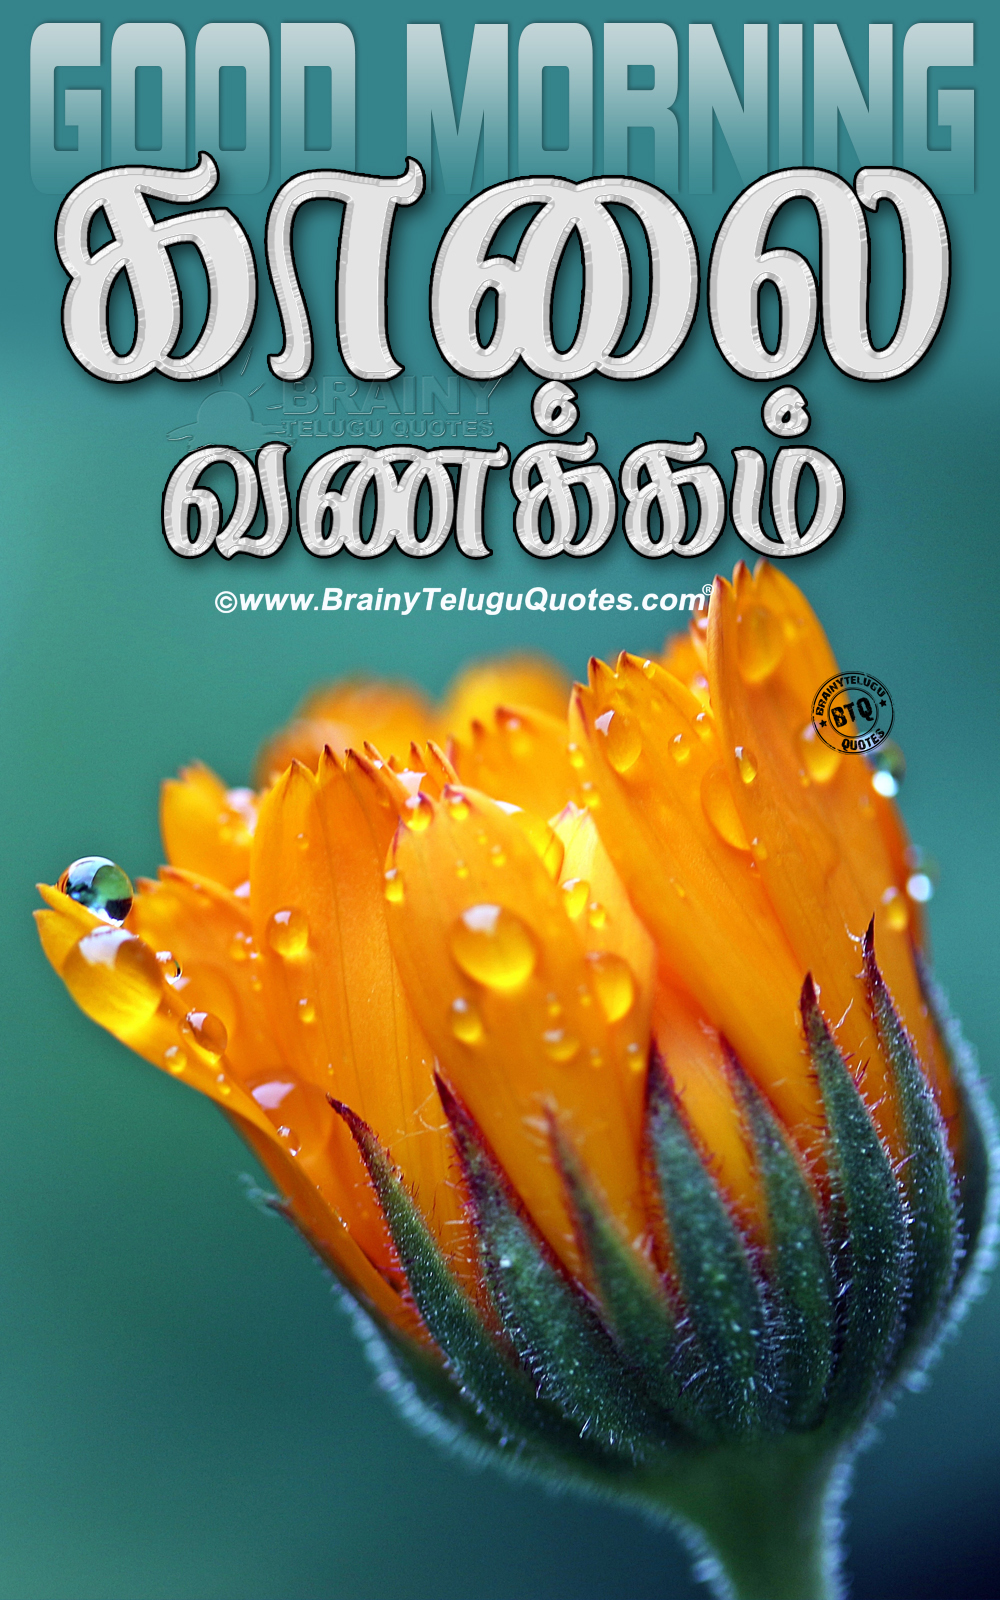 Tamil Language Kalai Vanakkam Good Morning Images In Tamil ...